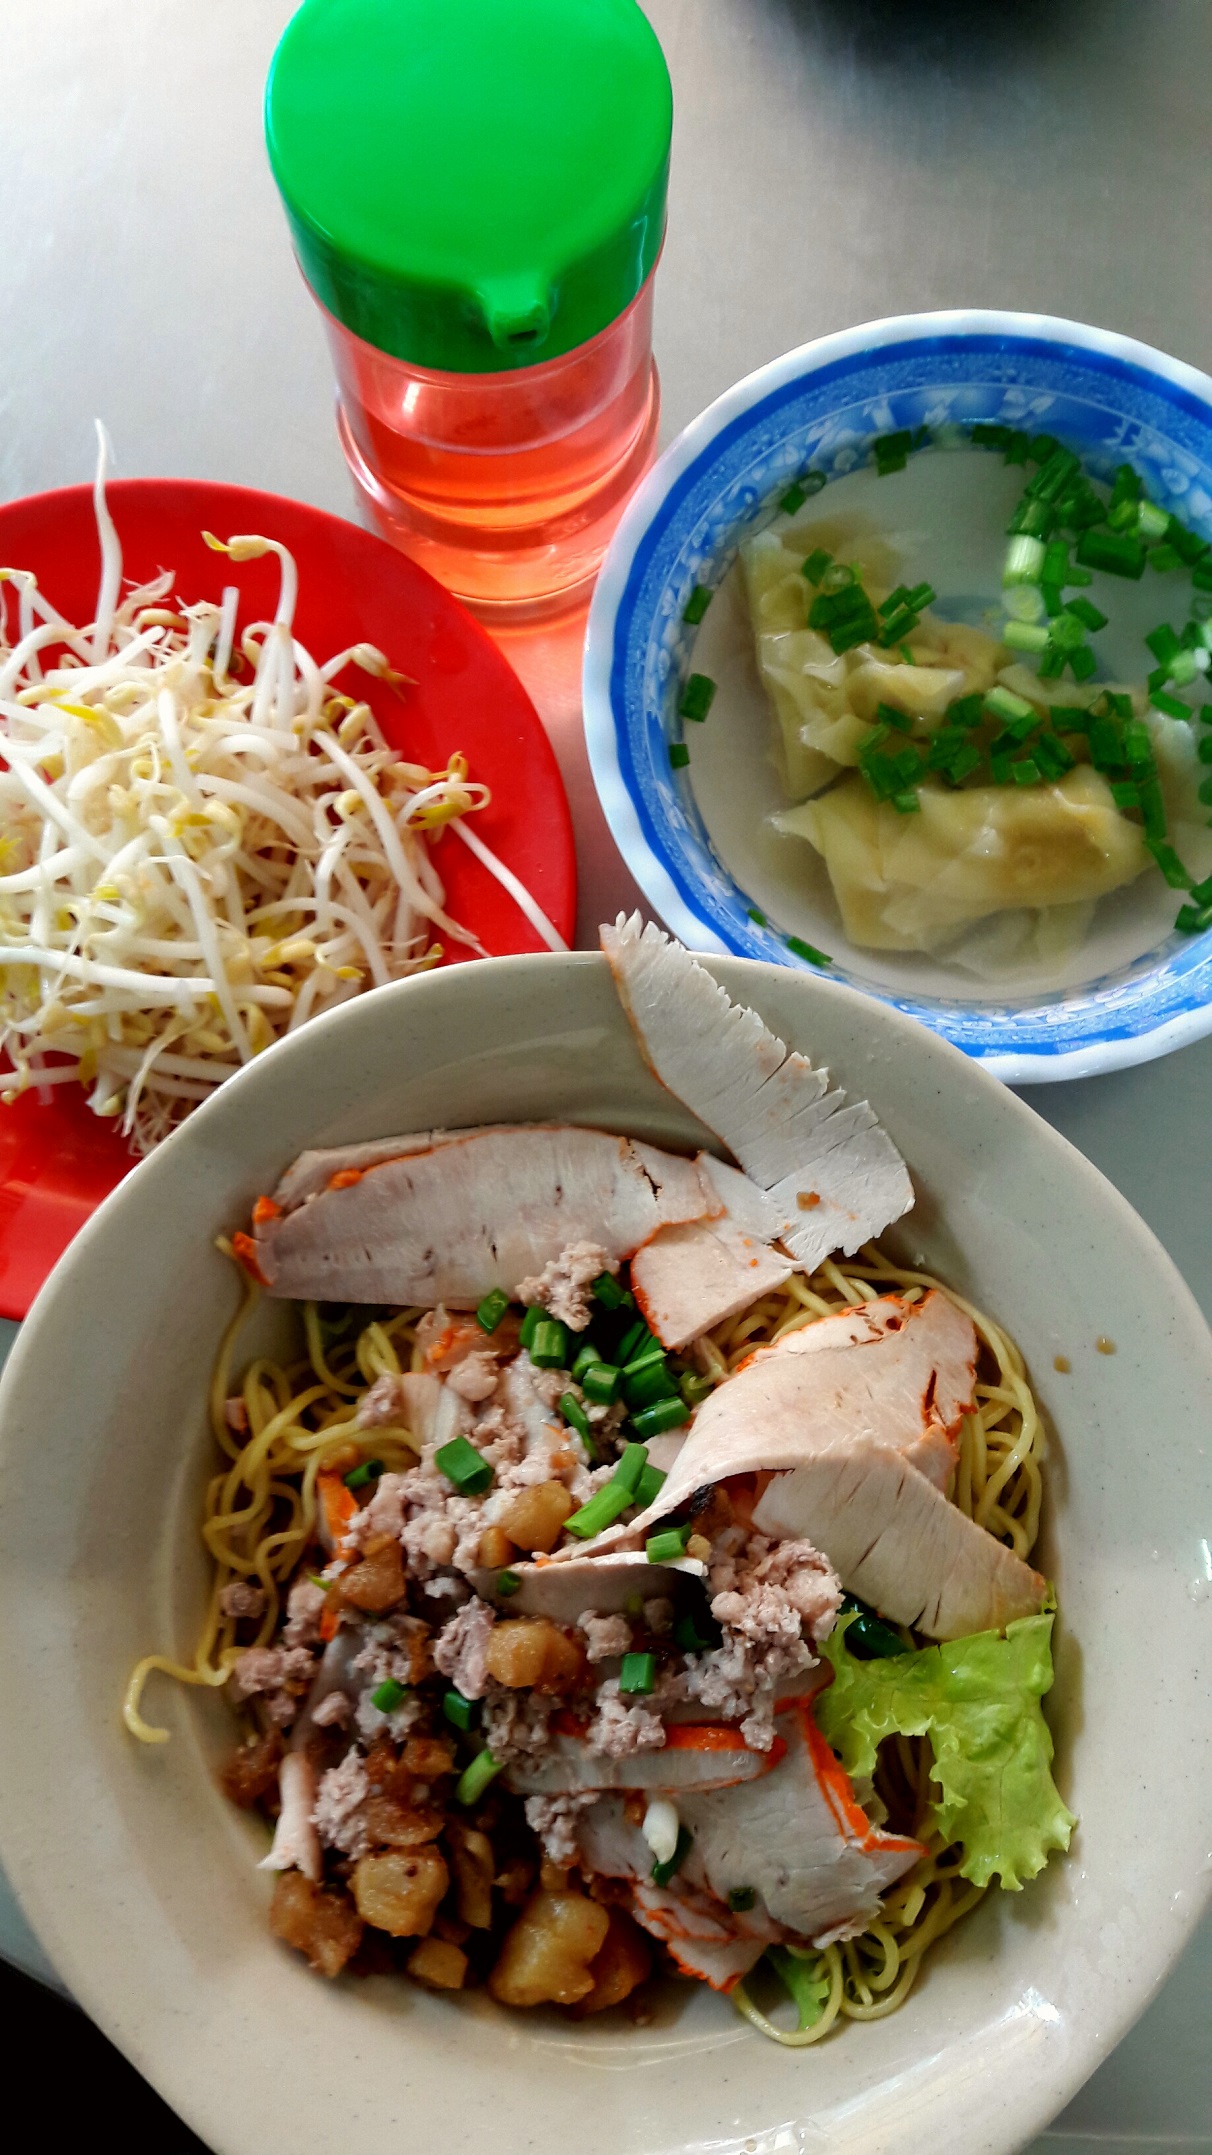 A knockout serving of 'mì hoành thánh' (wonton noodle soup) at Tàu Cao in Da Lat City, Lam Dong Province, Vietnam. Photo: Rick Ellis